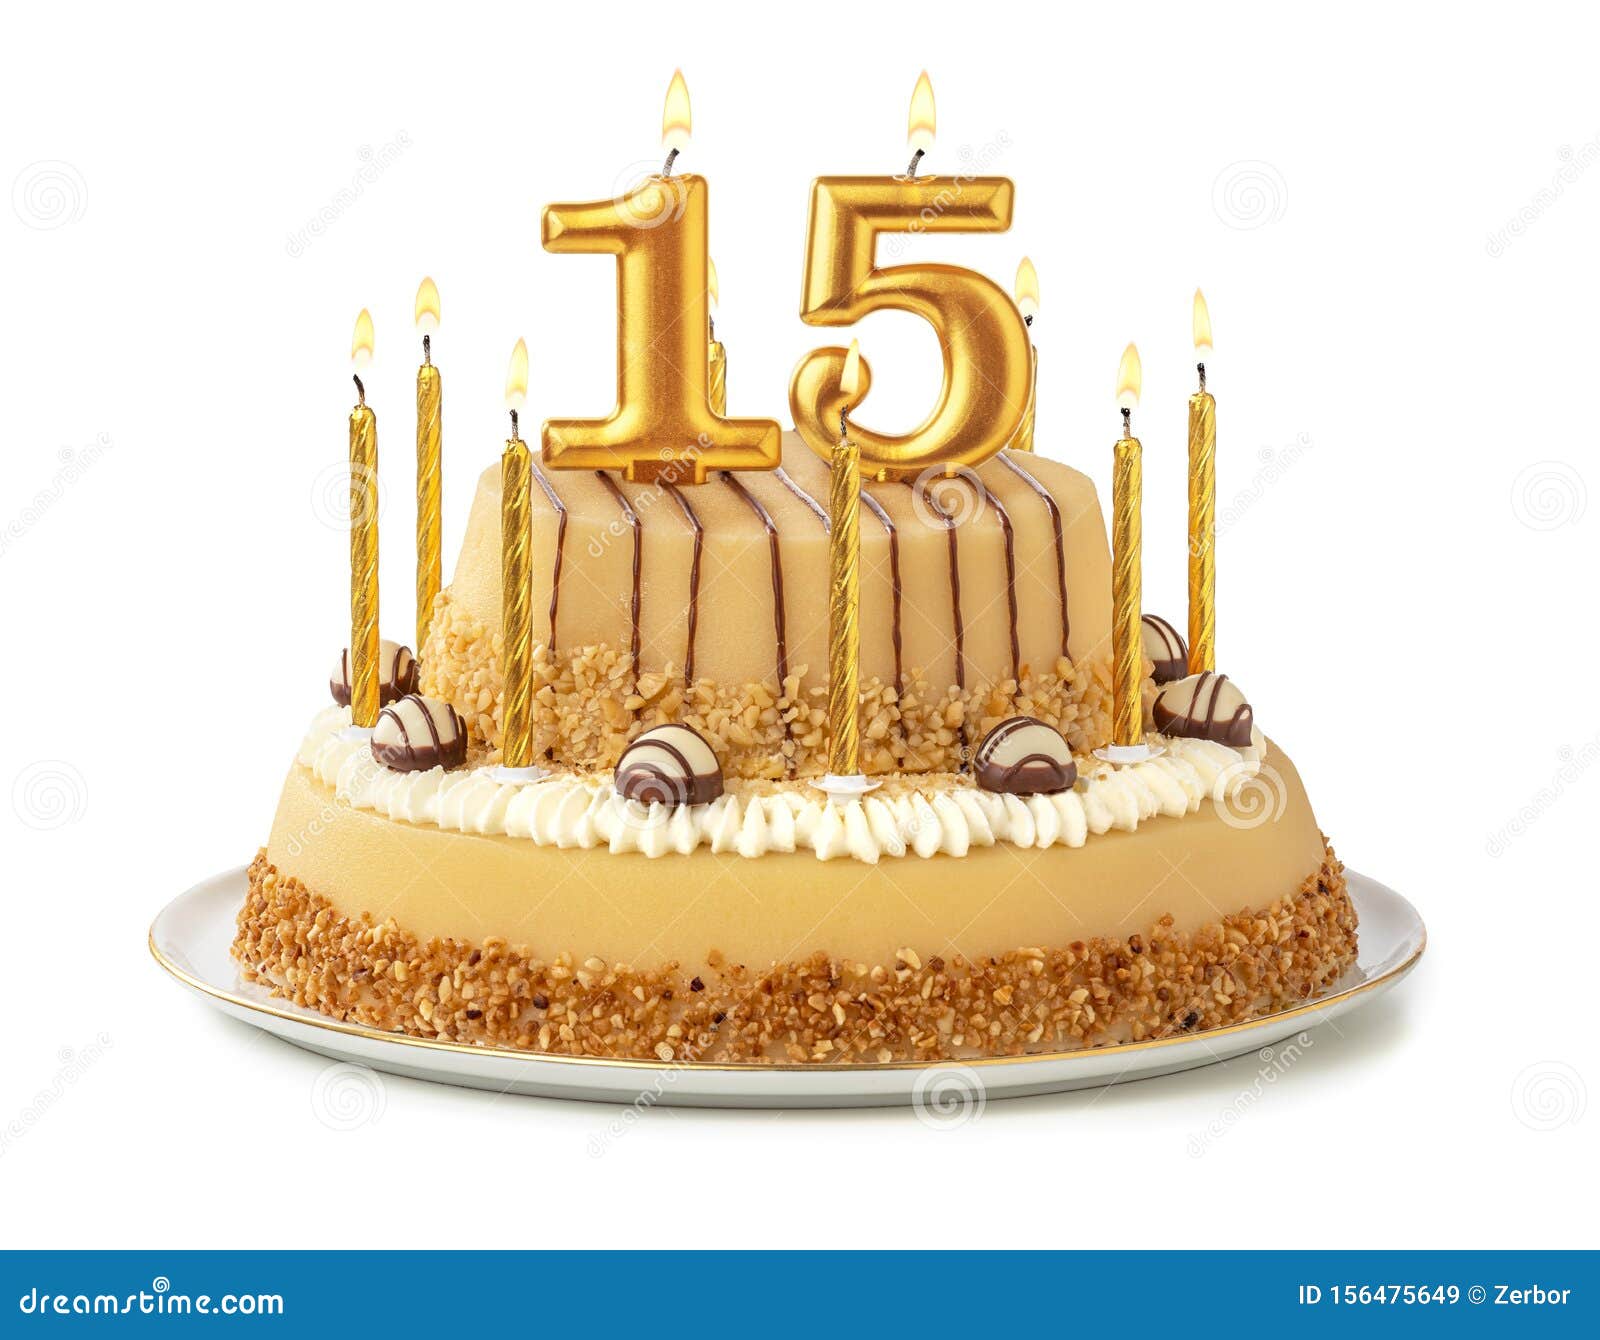 297 15 Birthday Cake Stock Photos - Free & Royalty-Free Stock Photos from Dreamstime